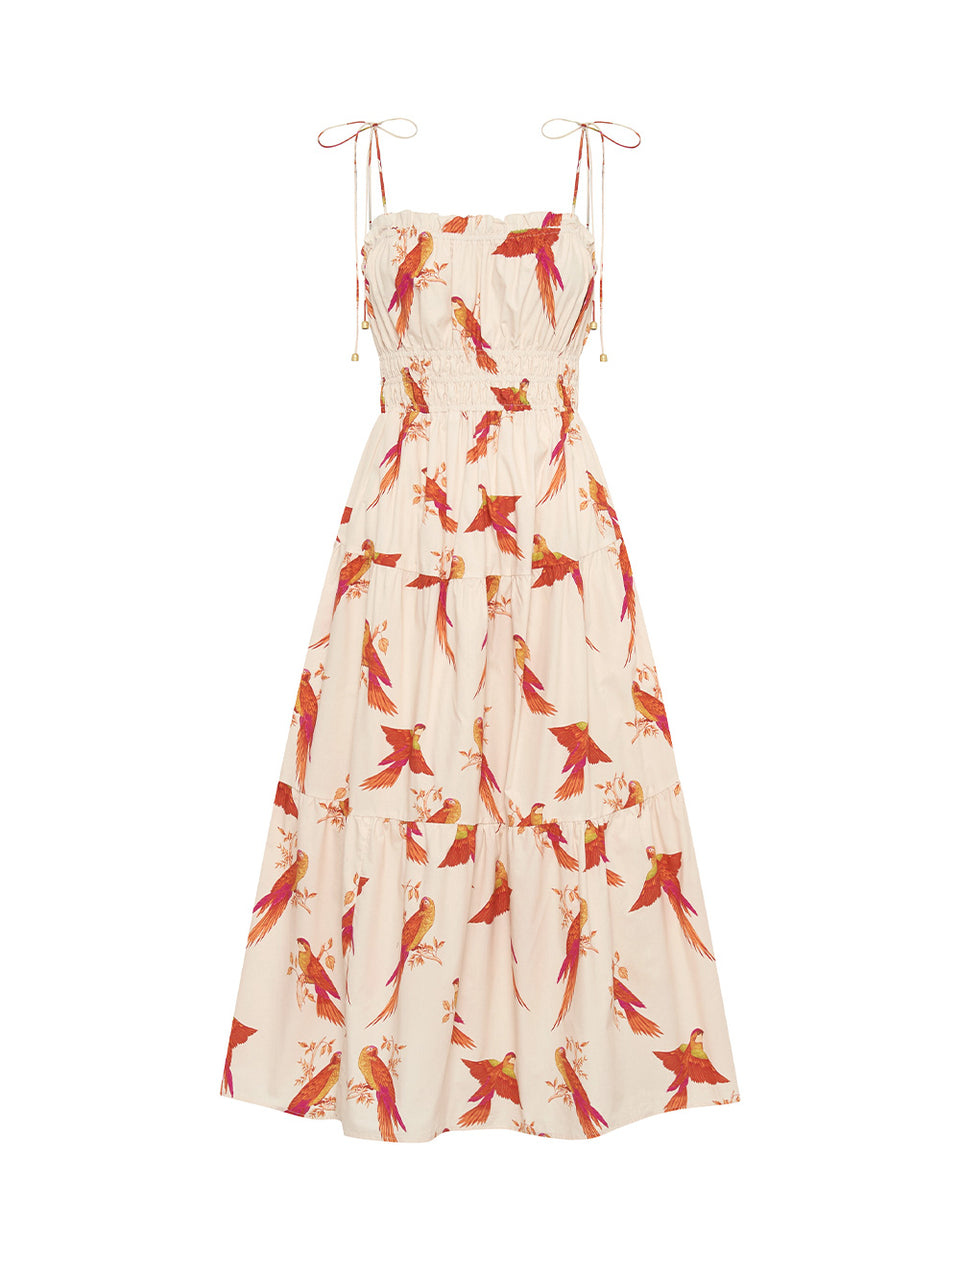 Kaylee Midi Dress KIVARI | Pink and orange bird print midi dress campaign